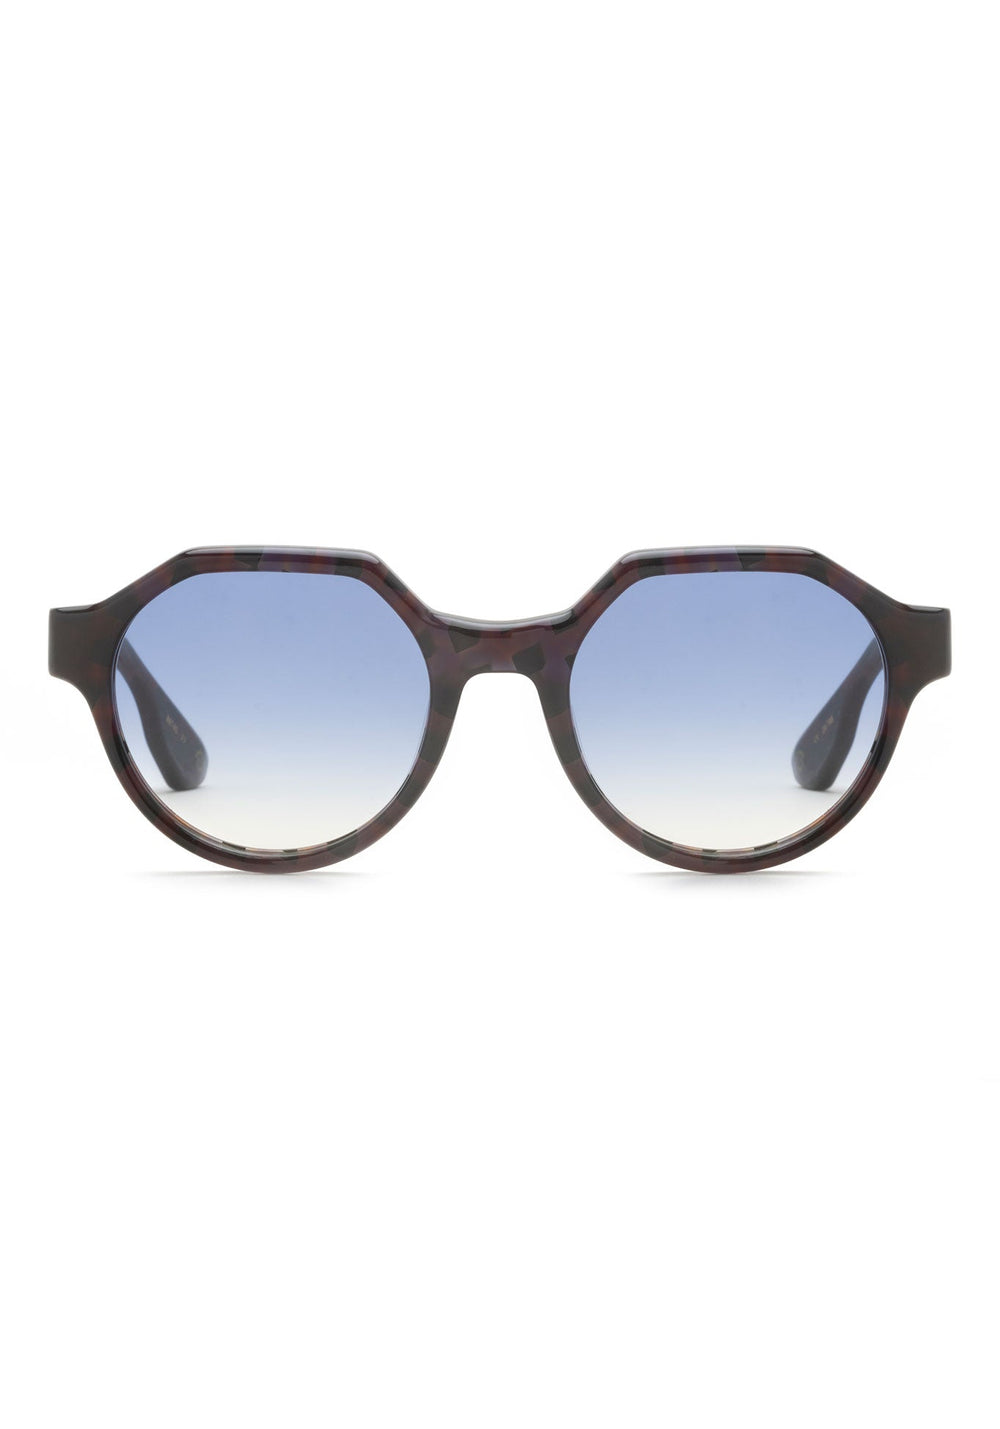 KREWE GLASSES - SADIE | Nova + Custom Vanity Tint handcrafted, luxury geometric black acetate glasses with blue tinted lenses